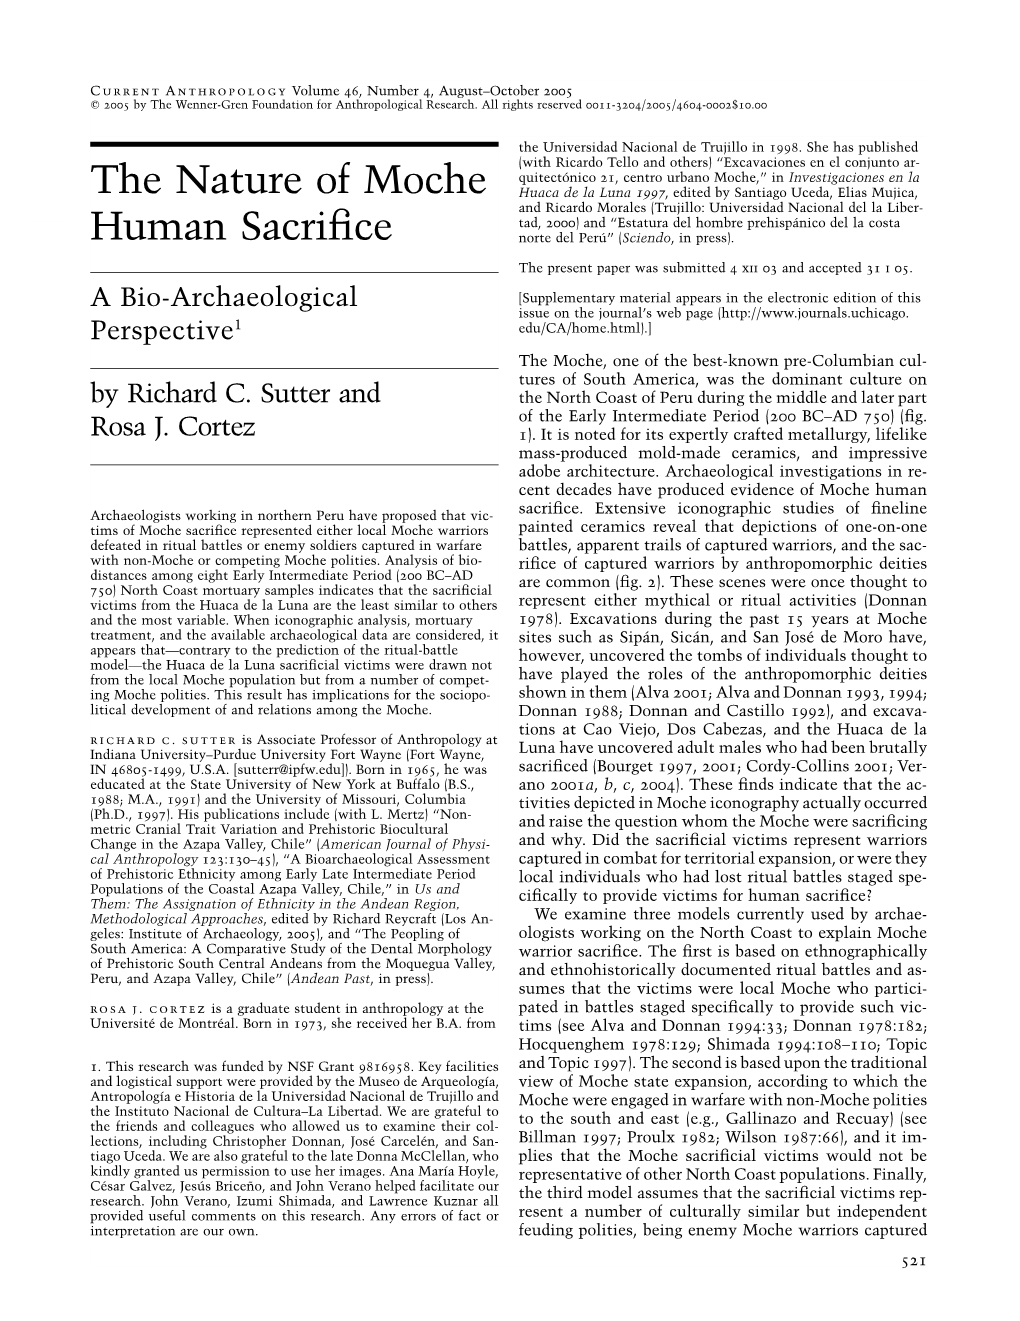 The Nature of Moche Human Sacrifice